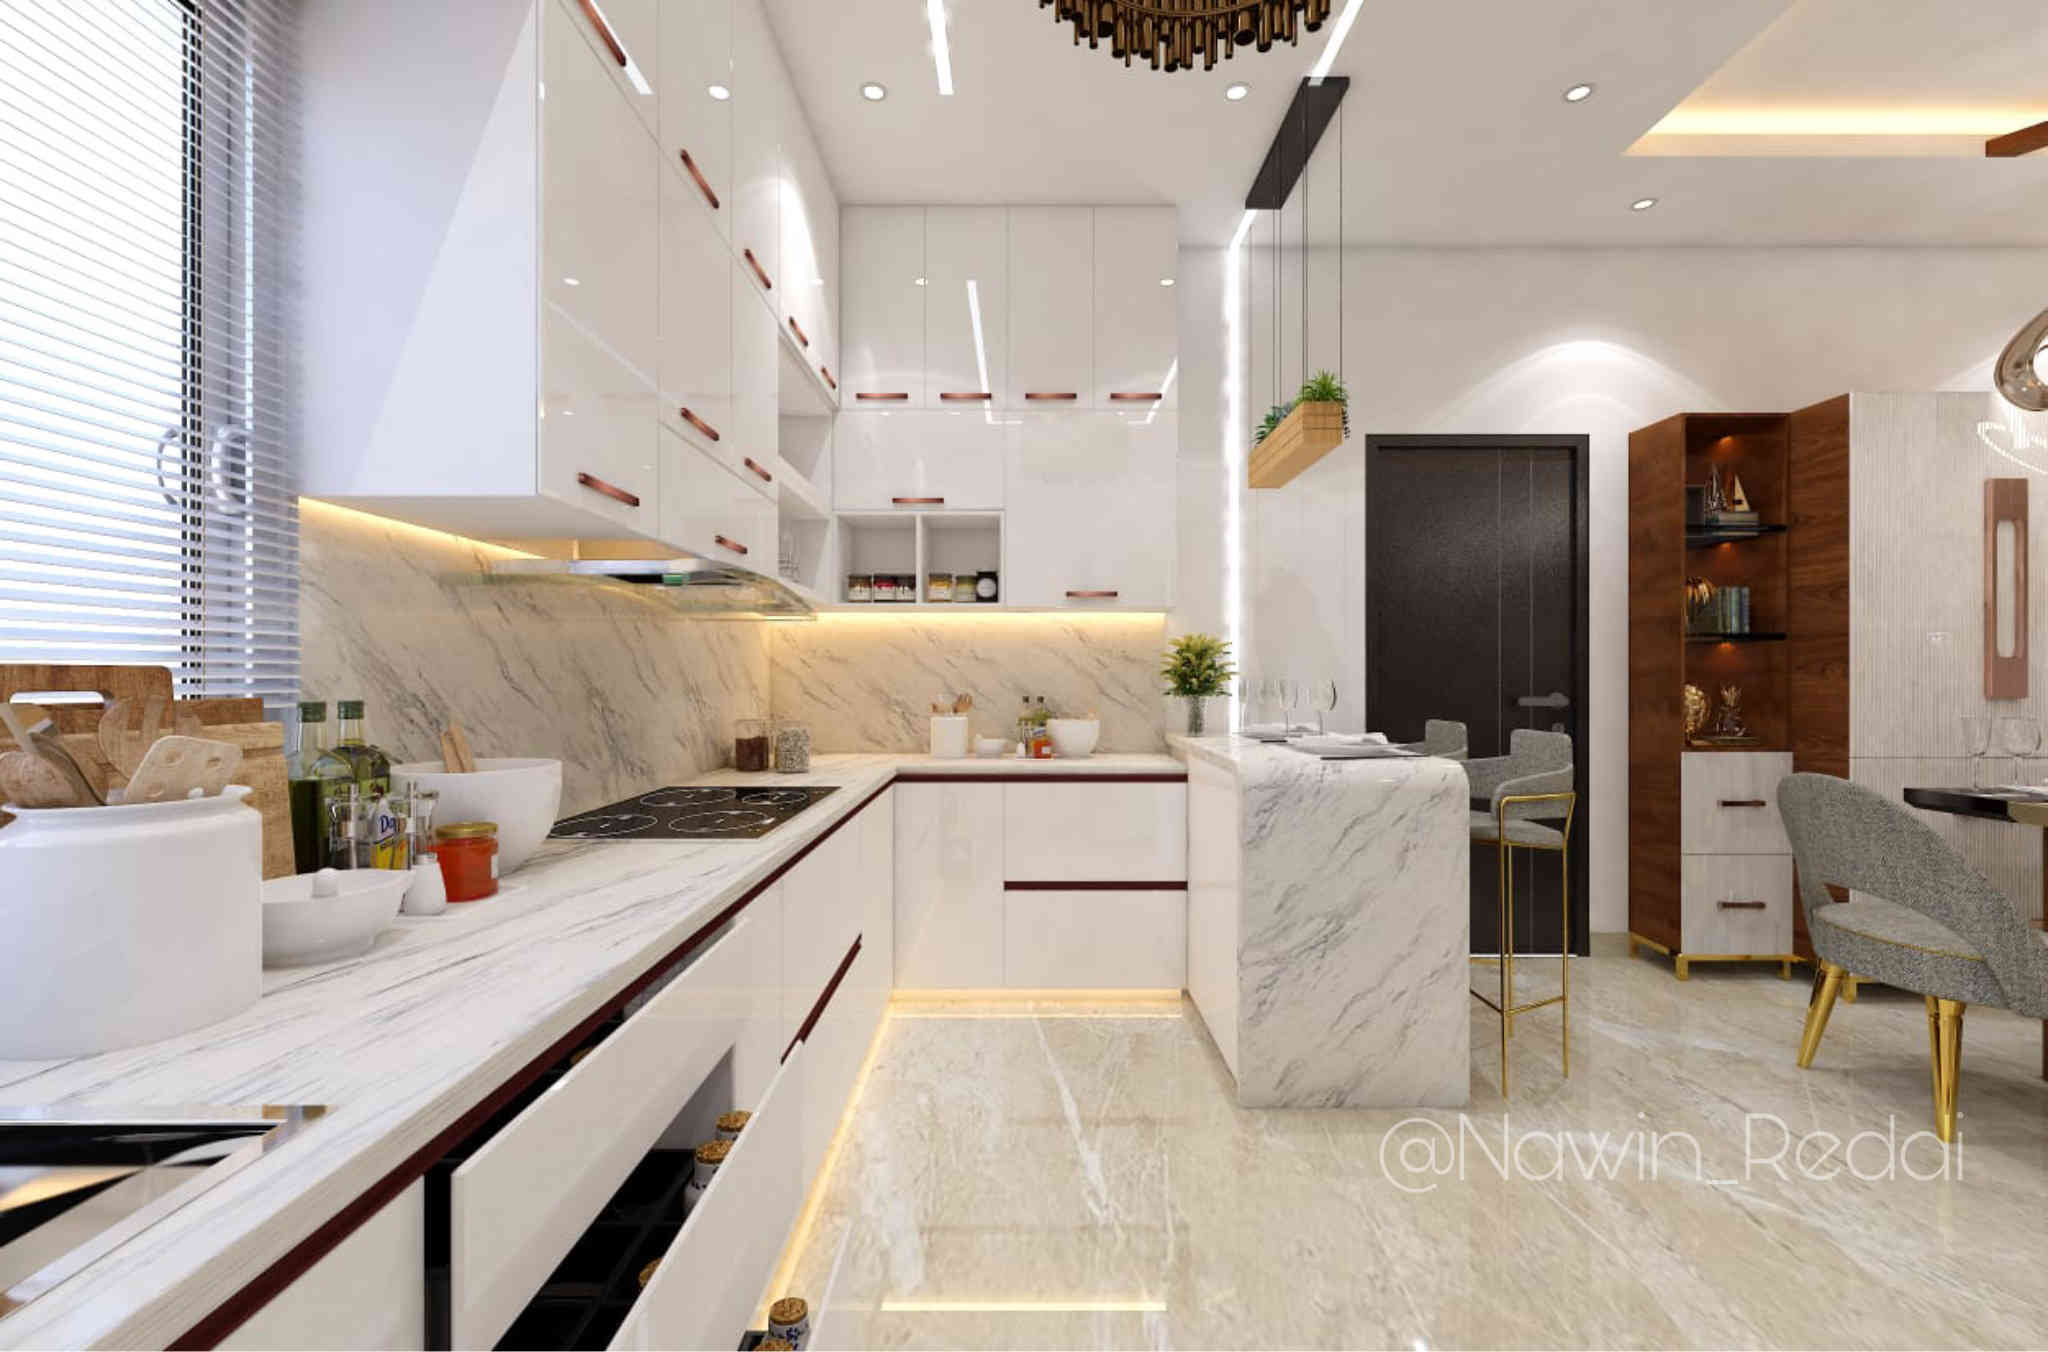 Modular Kitchen Design With White Marble